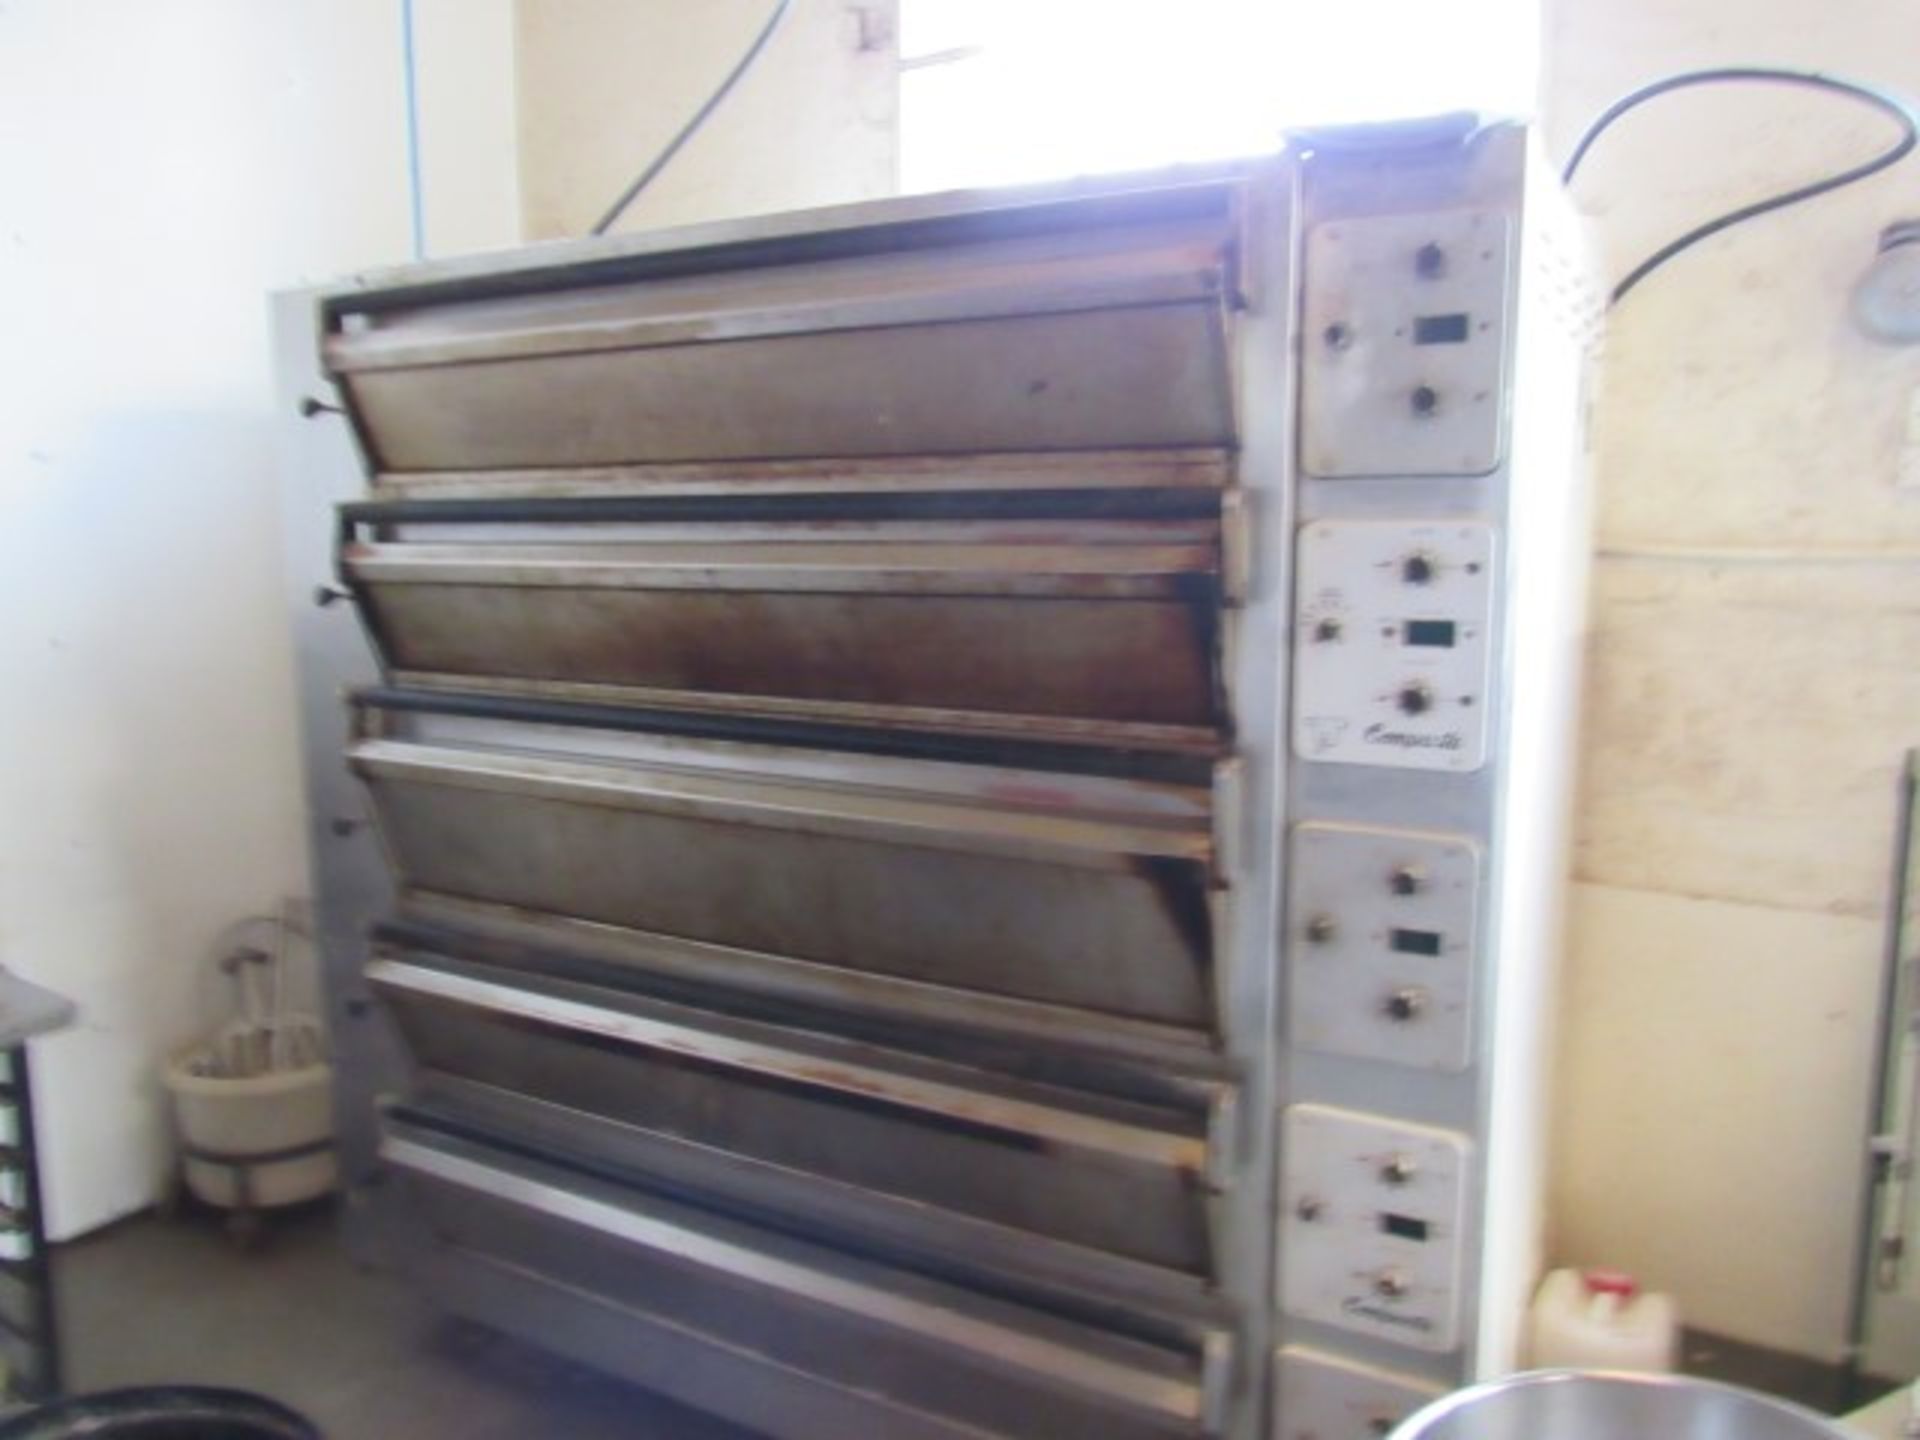 Compacta 5 Deck Oven - Image 3 of 4